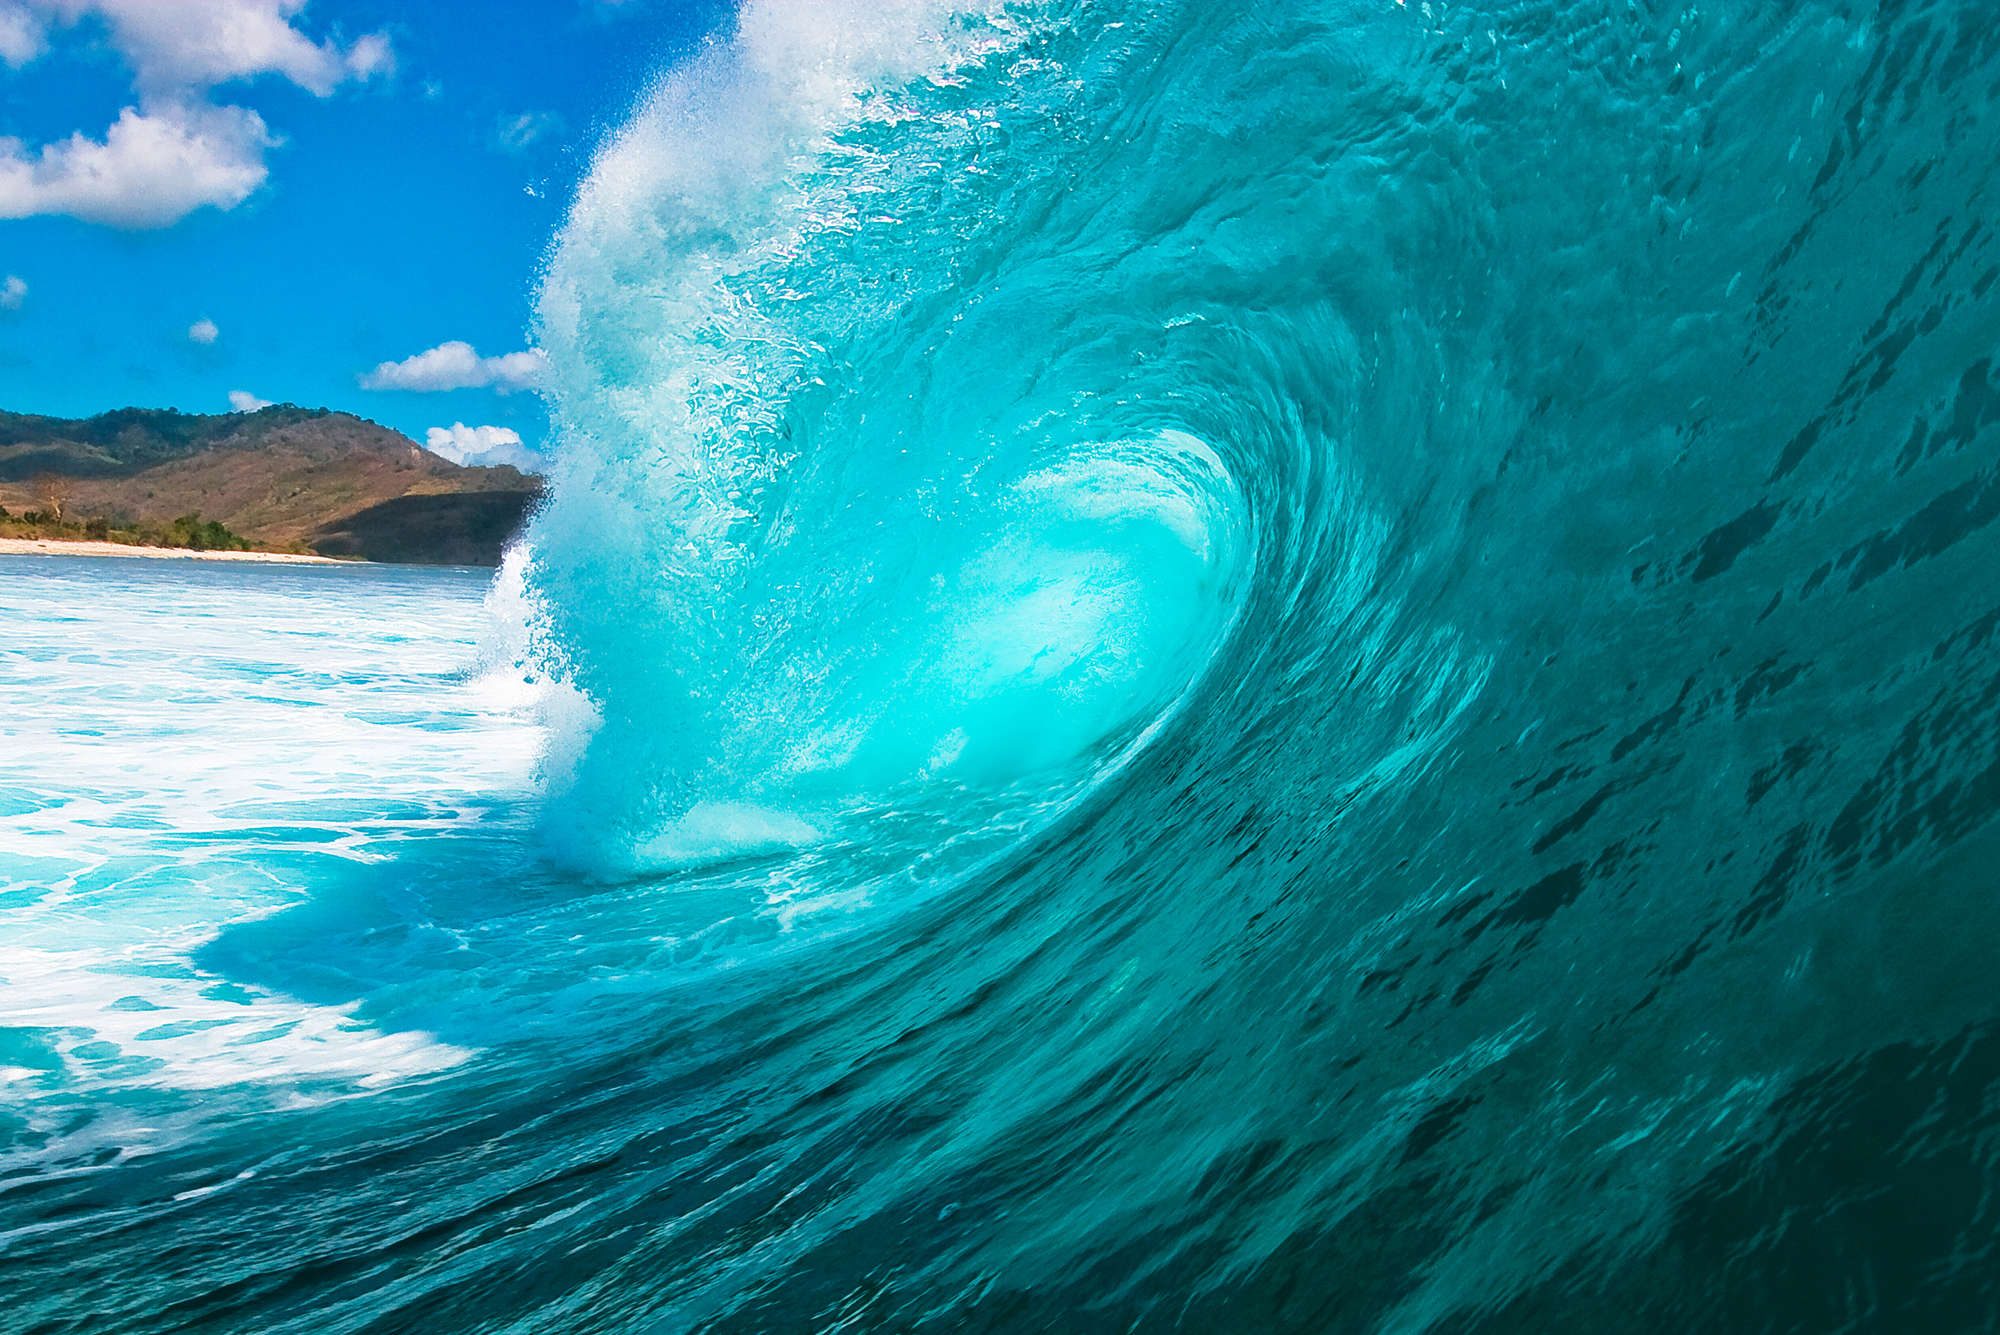             Fototapete Meer mit großer Welle – Premium Glattvlies
        